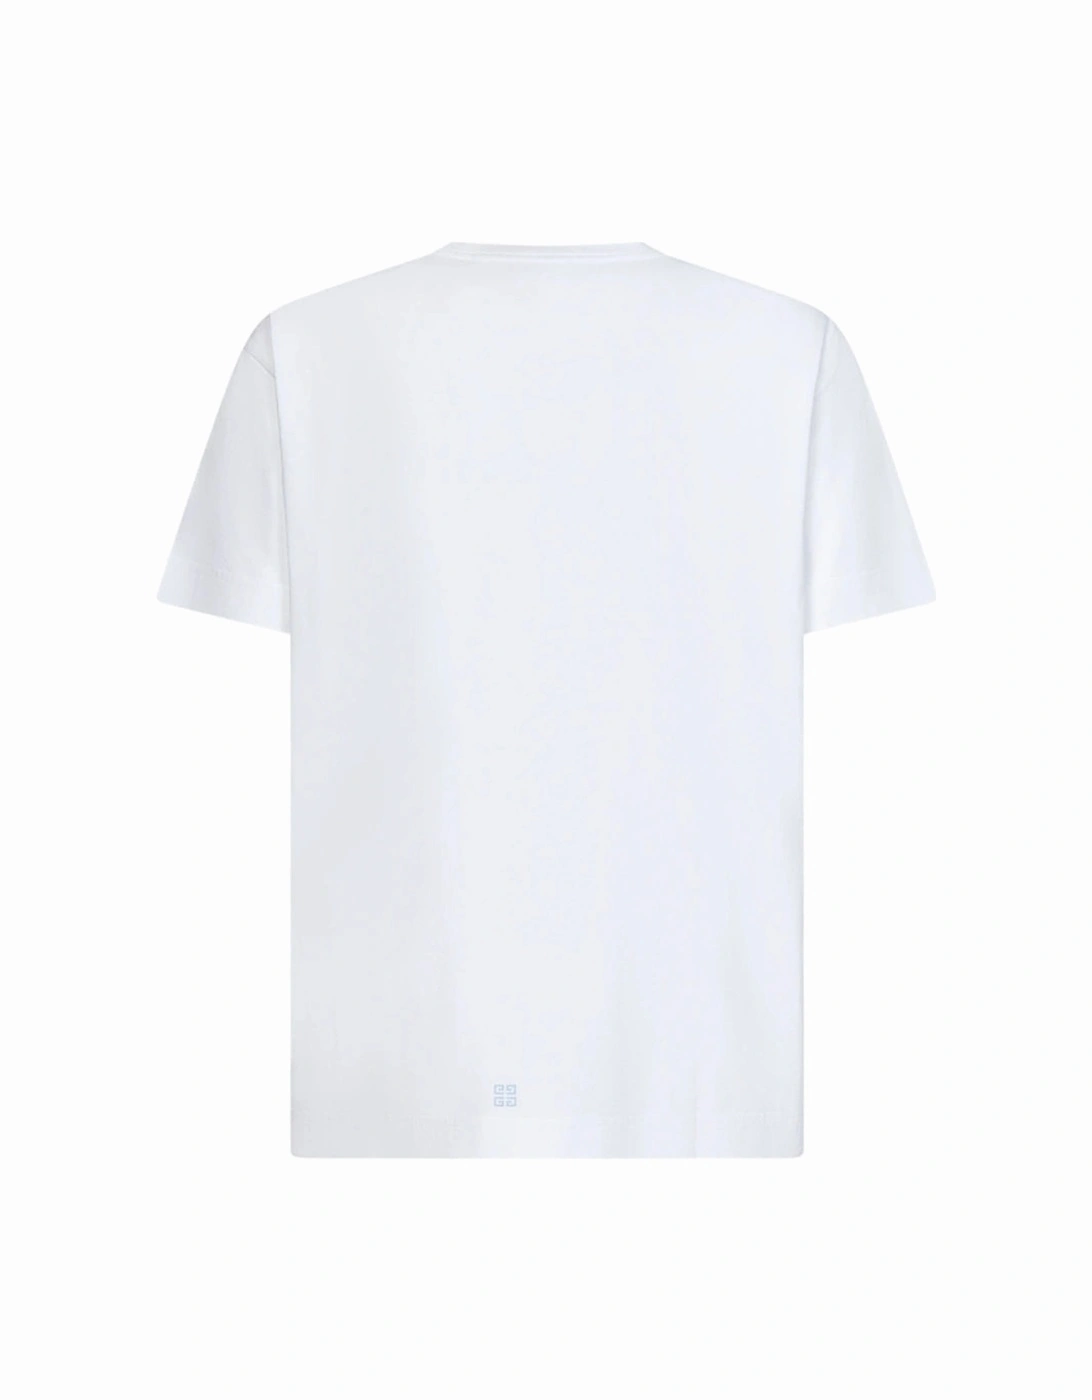 4G Stars Blue logo printed T-Shirt in White